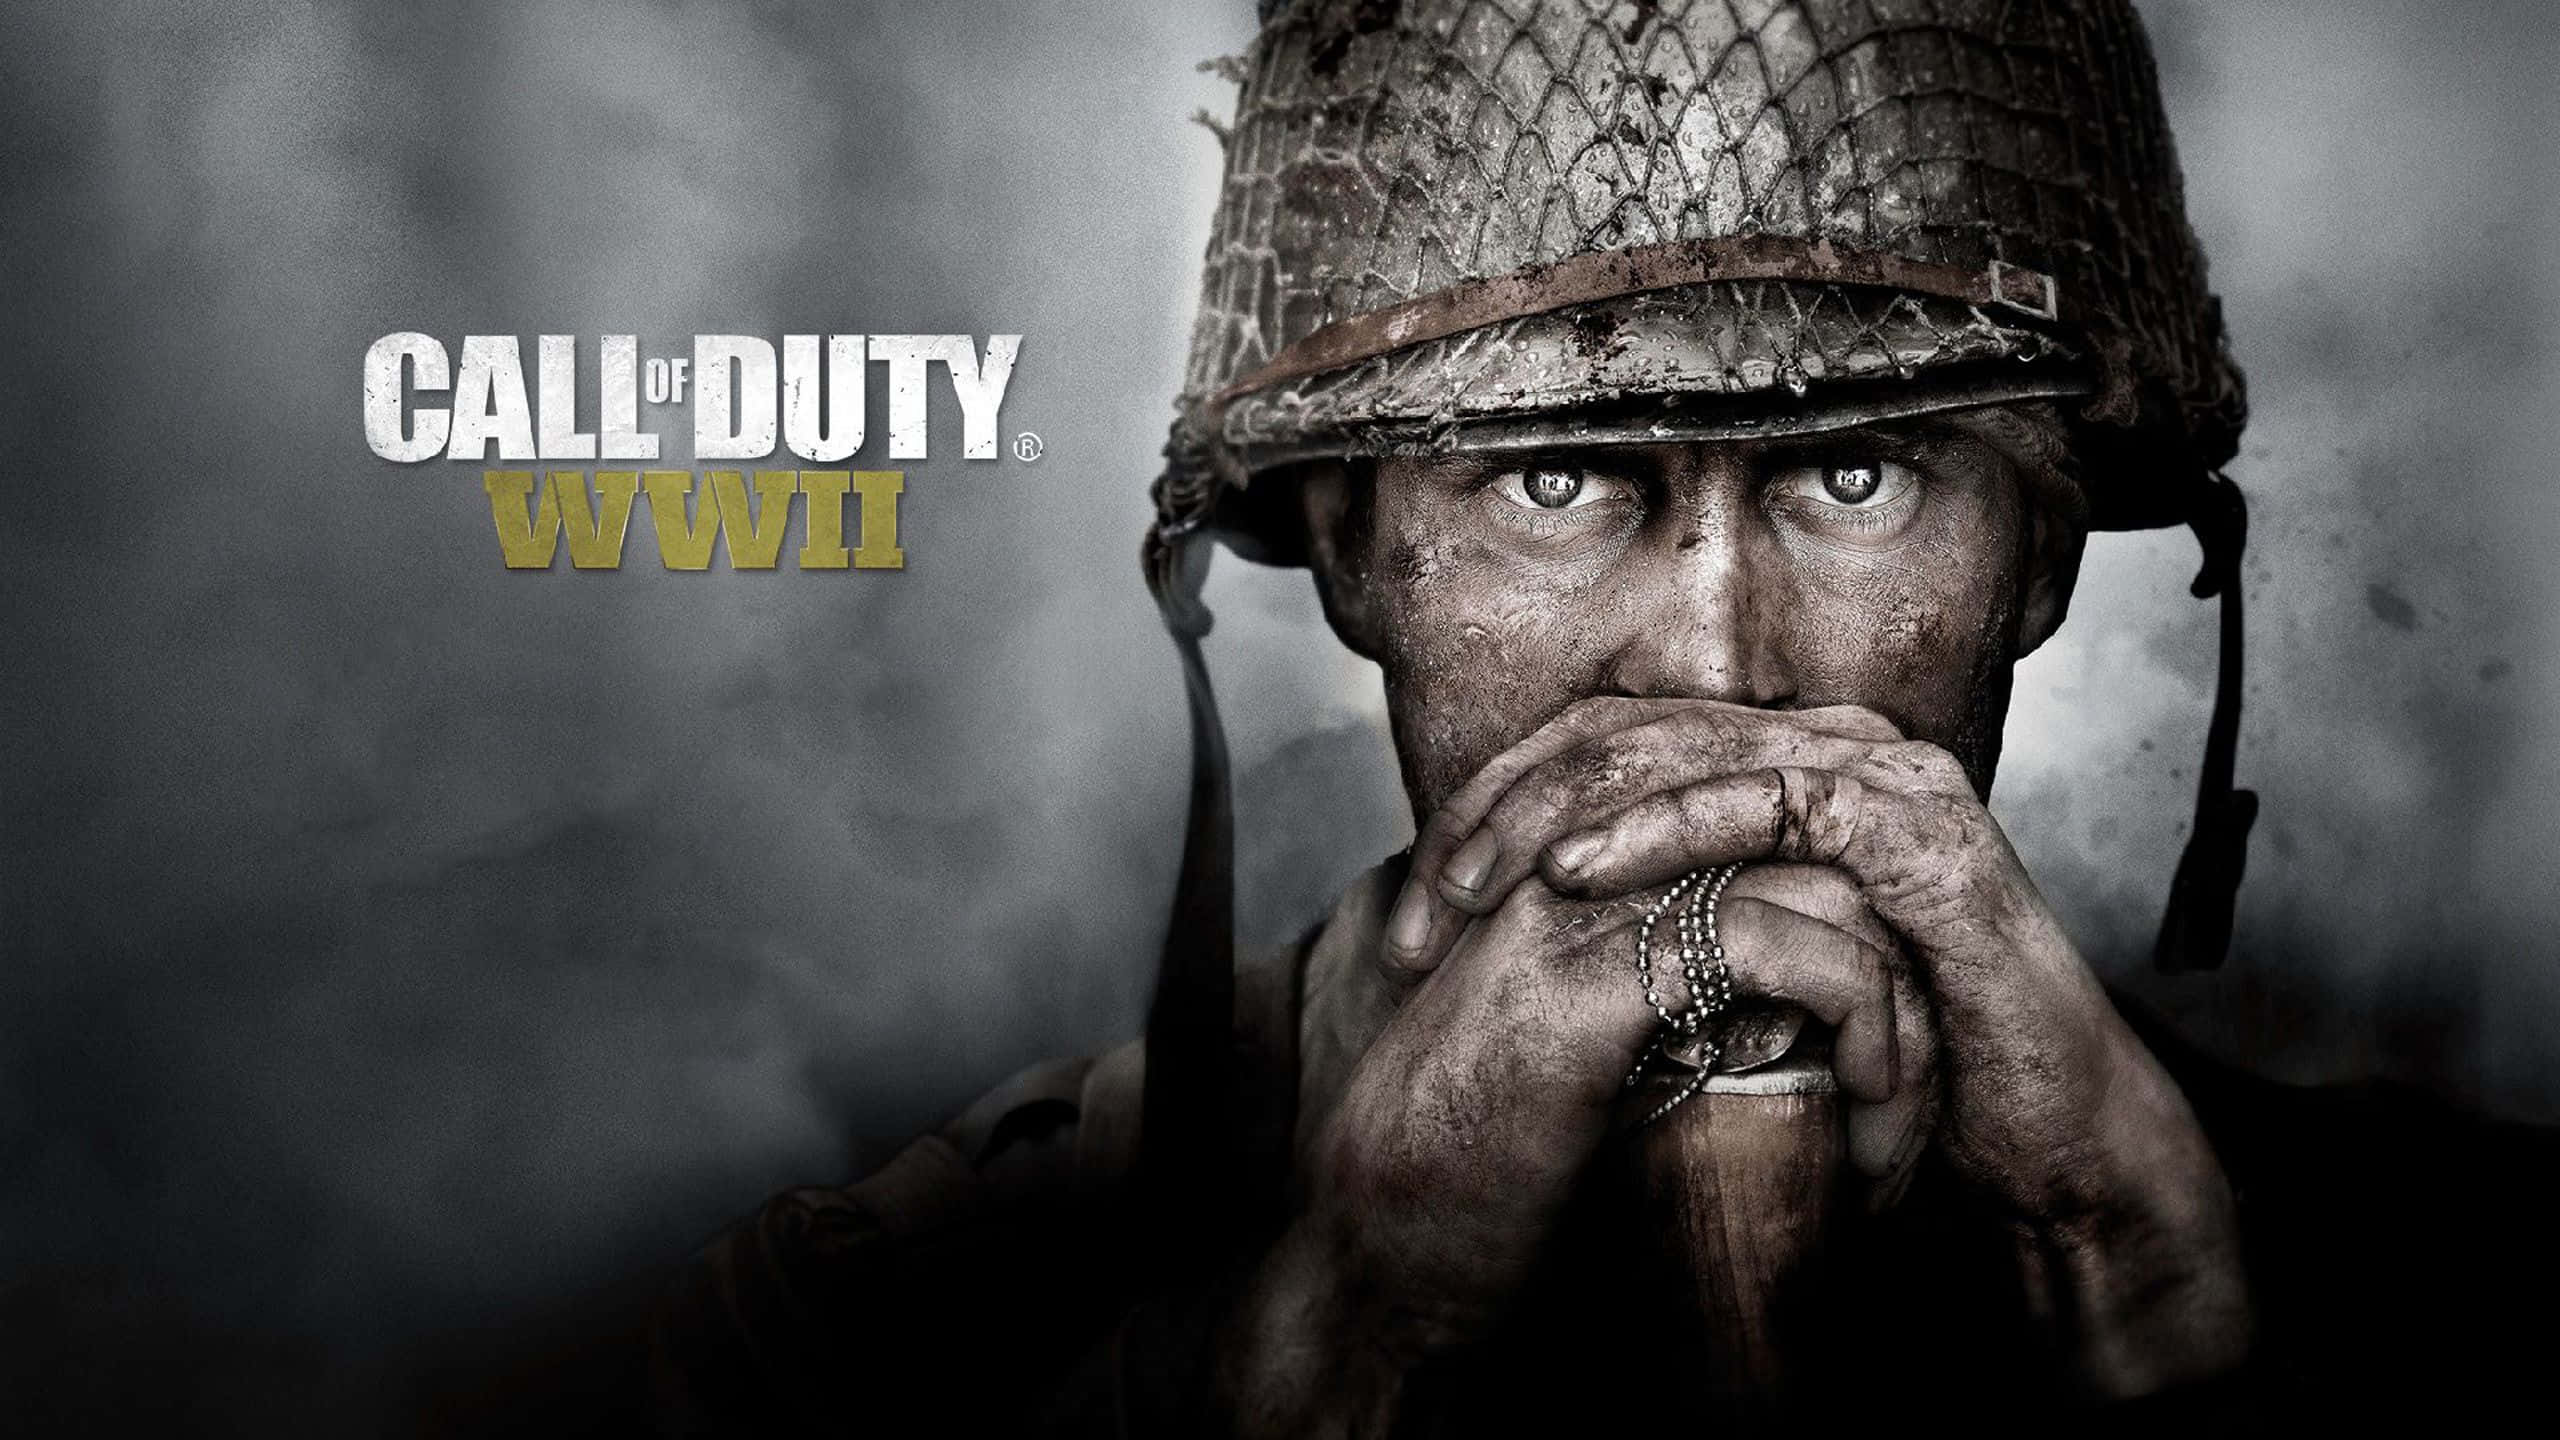 Call of Duty: WWII. Андроид Duty Wars – WWII. Call of Duty: WWII командир. Call of Duty WWII системные требования. D day the final